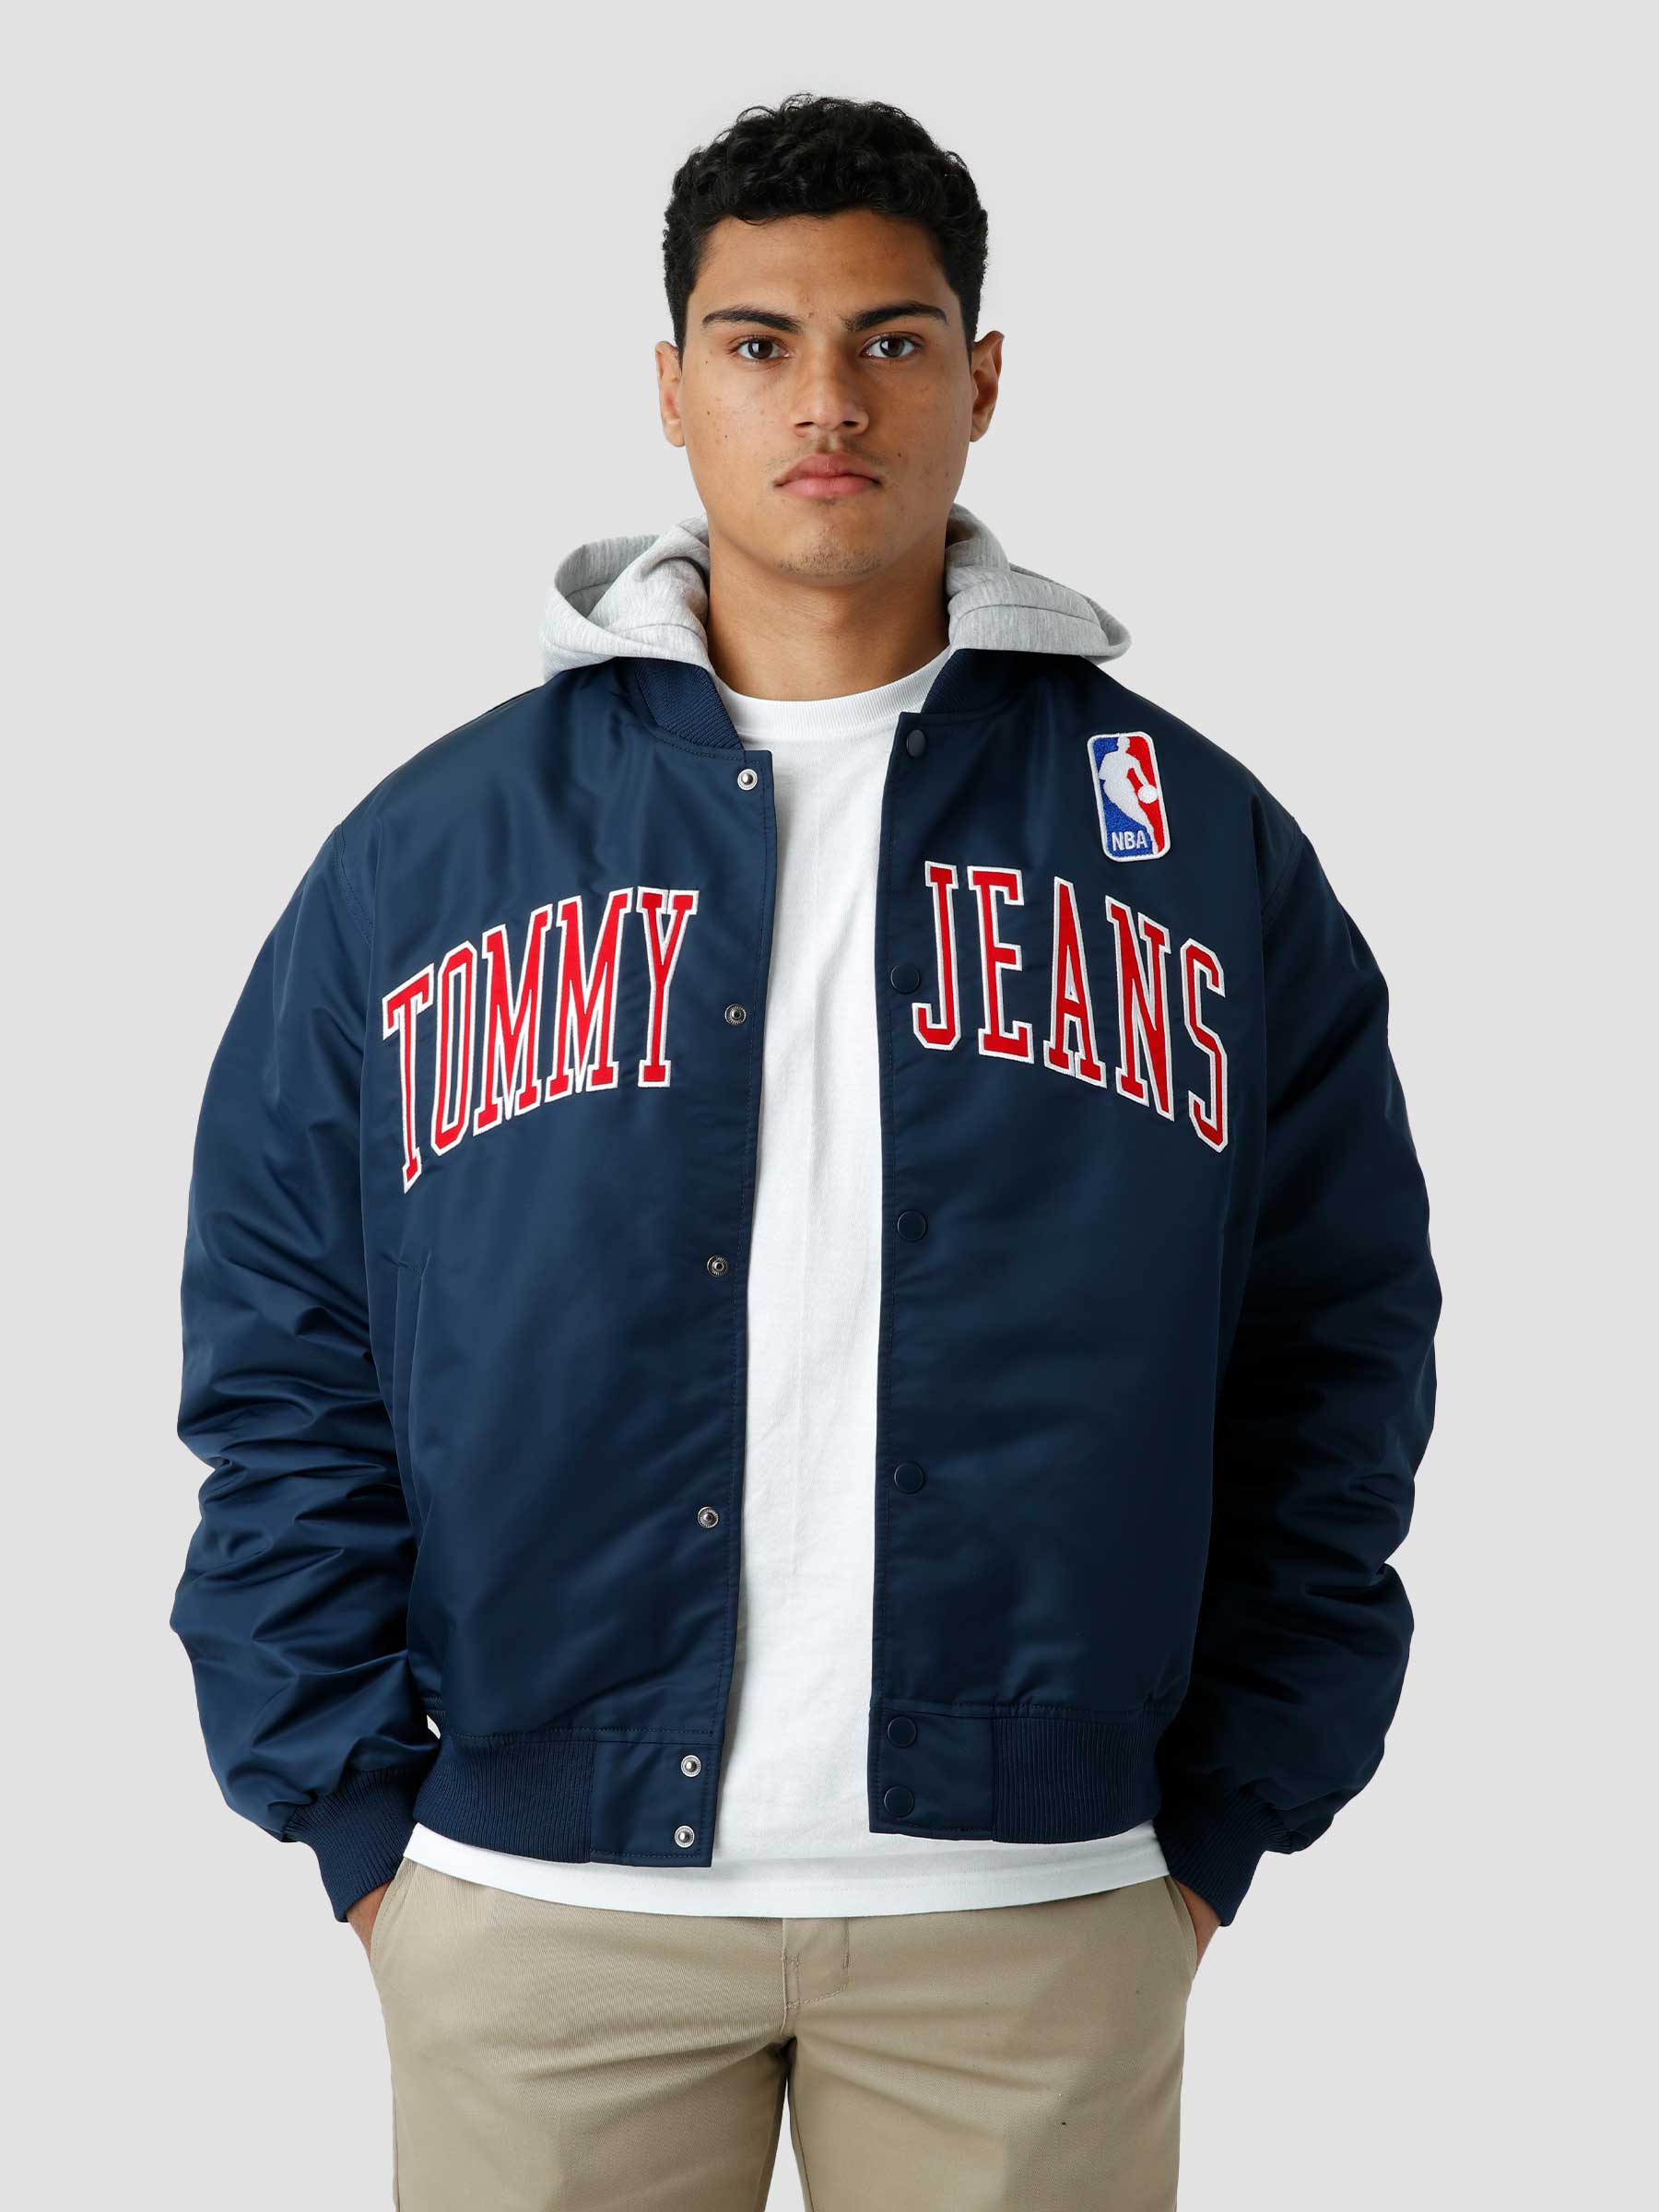 outfit picks week 18 Tommy Jeans TJM NBA-M16-opt2 Jacket